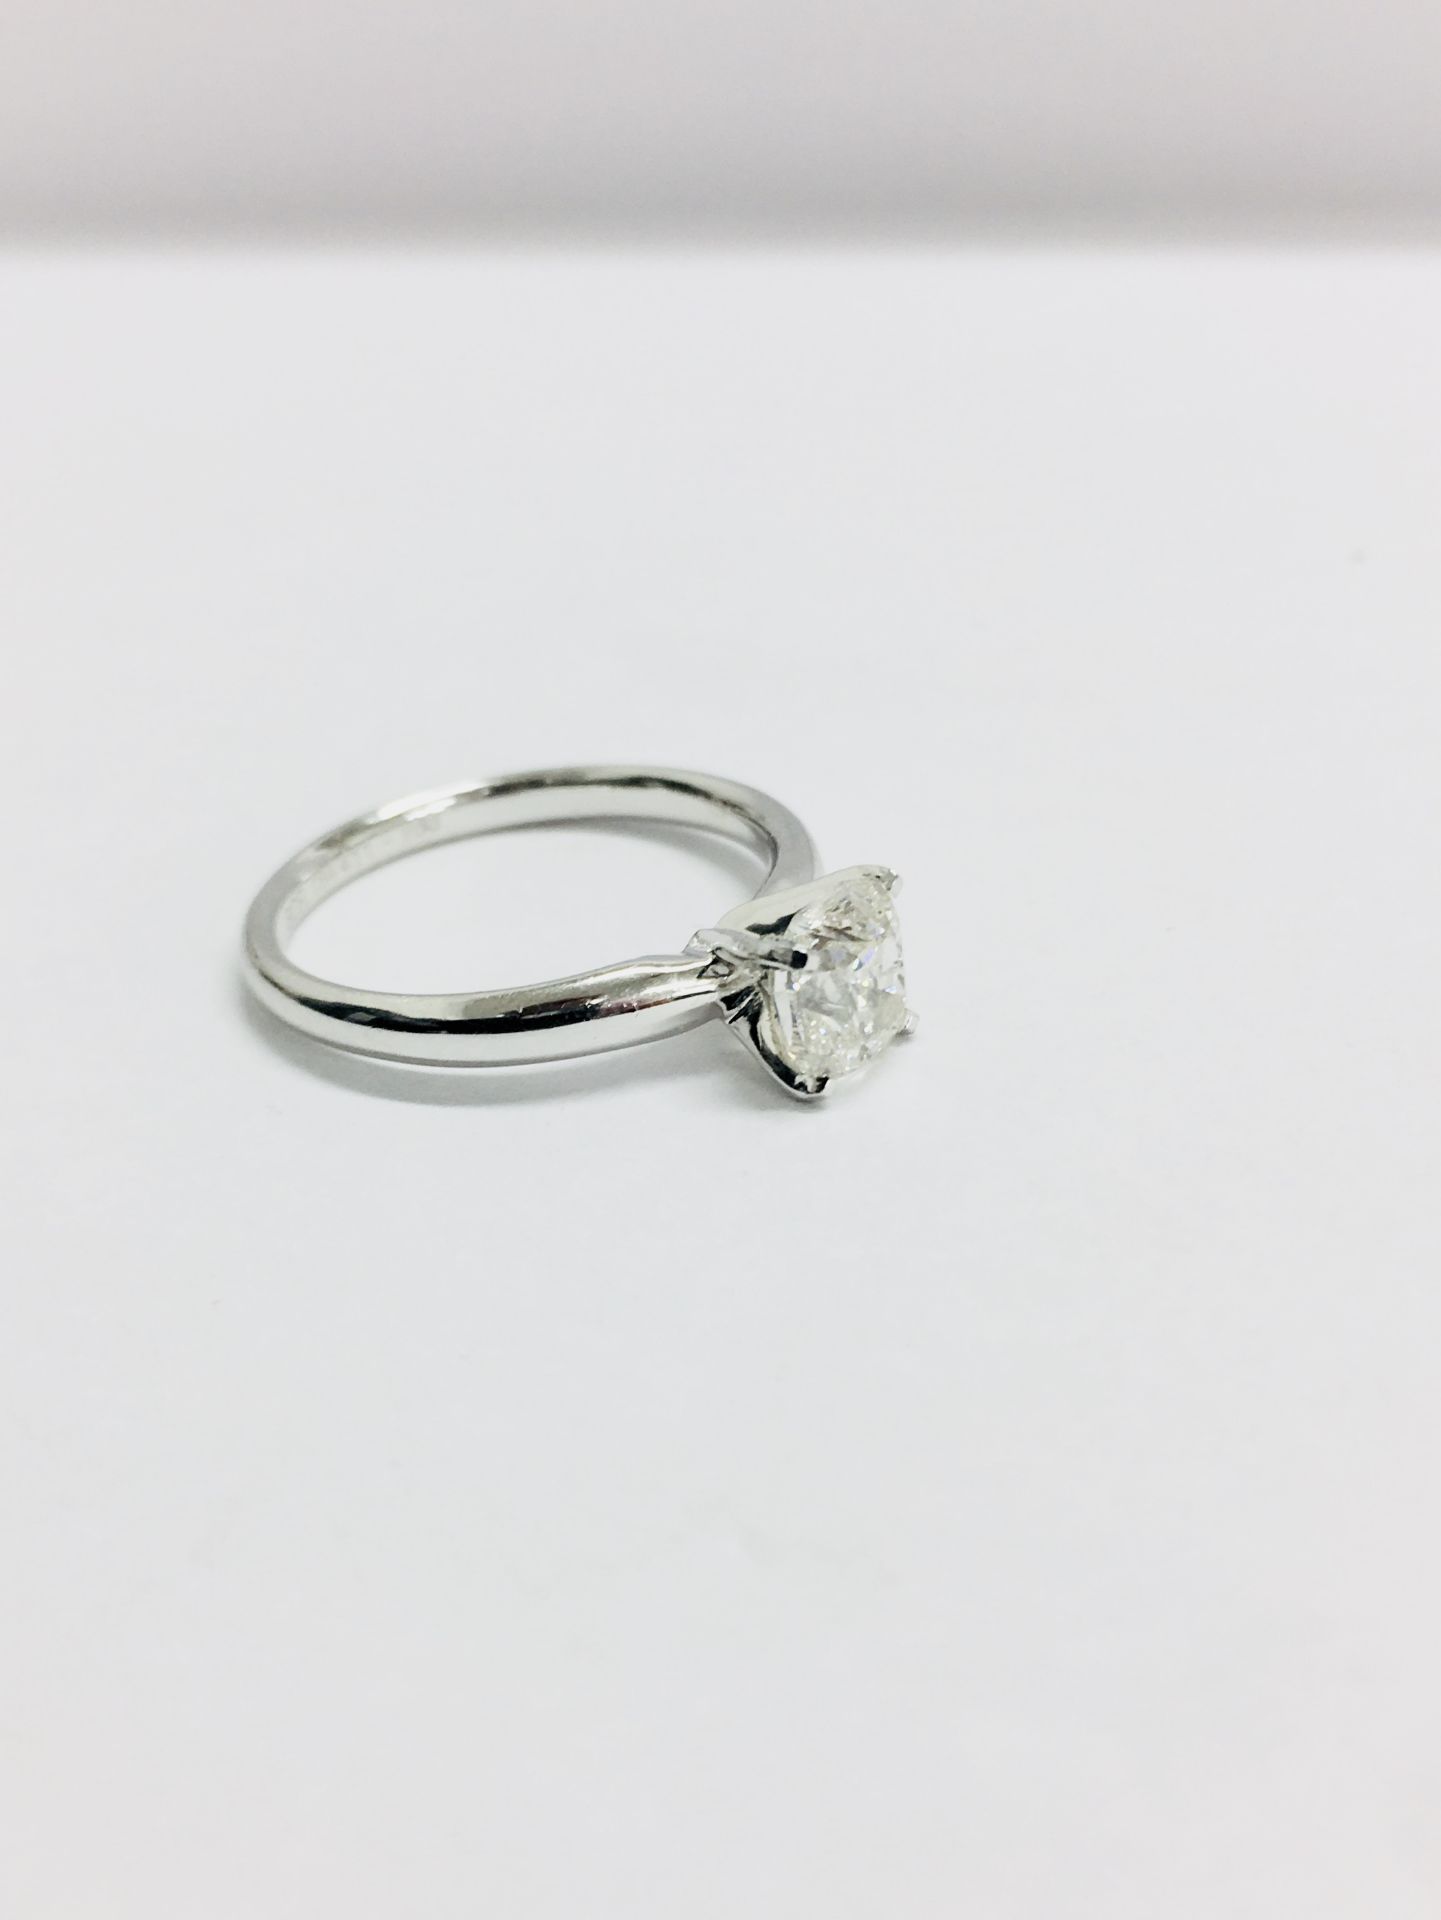 1c t cushion cut diamond solitaires ring,1ct cushion cut H colour vs 1 clarity,platinum setting, - Image 3 of 4